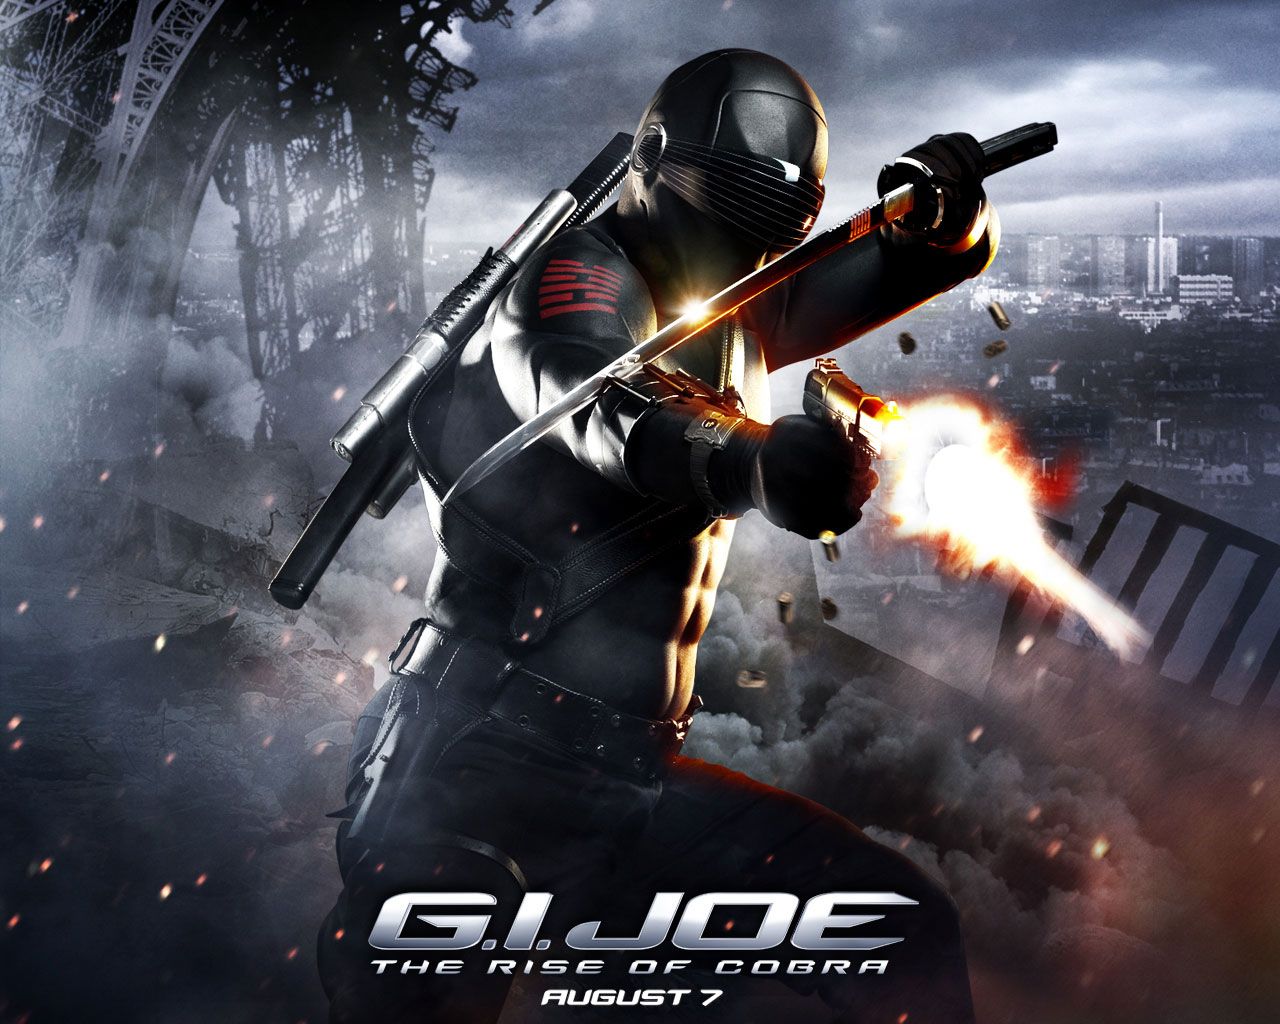 G.I. Joe: The Rise of Cobra: free desktop wallpaper and background image